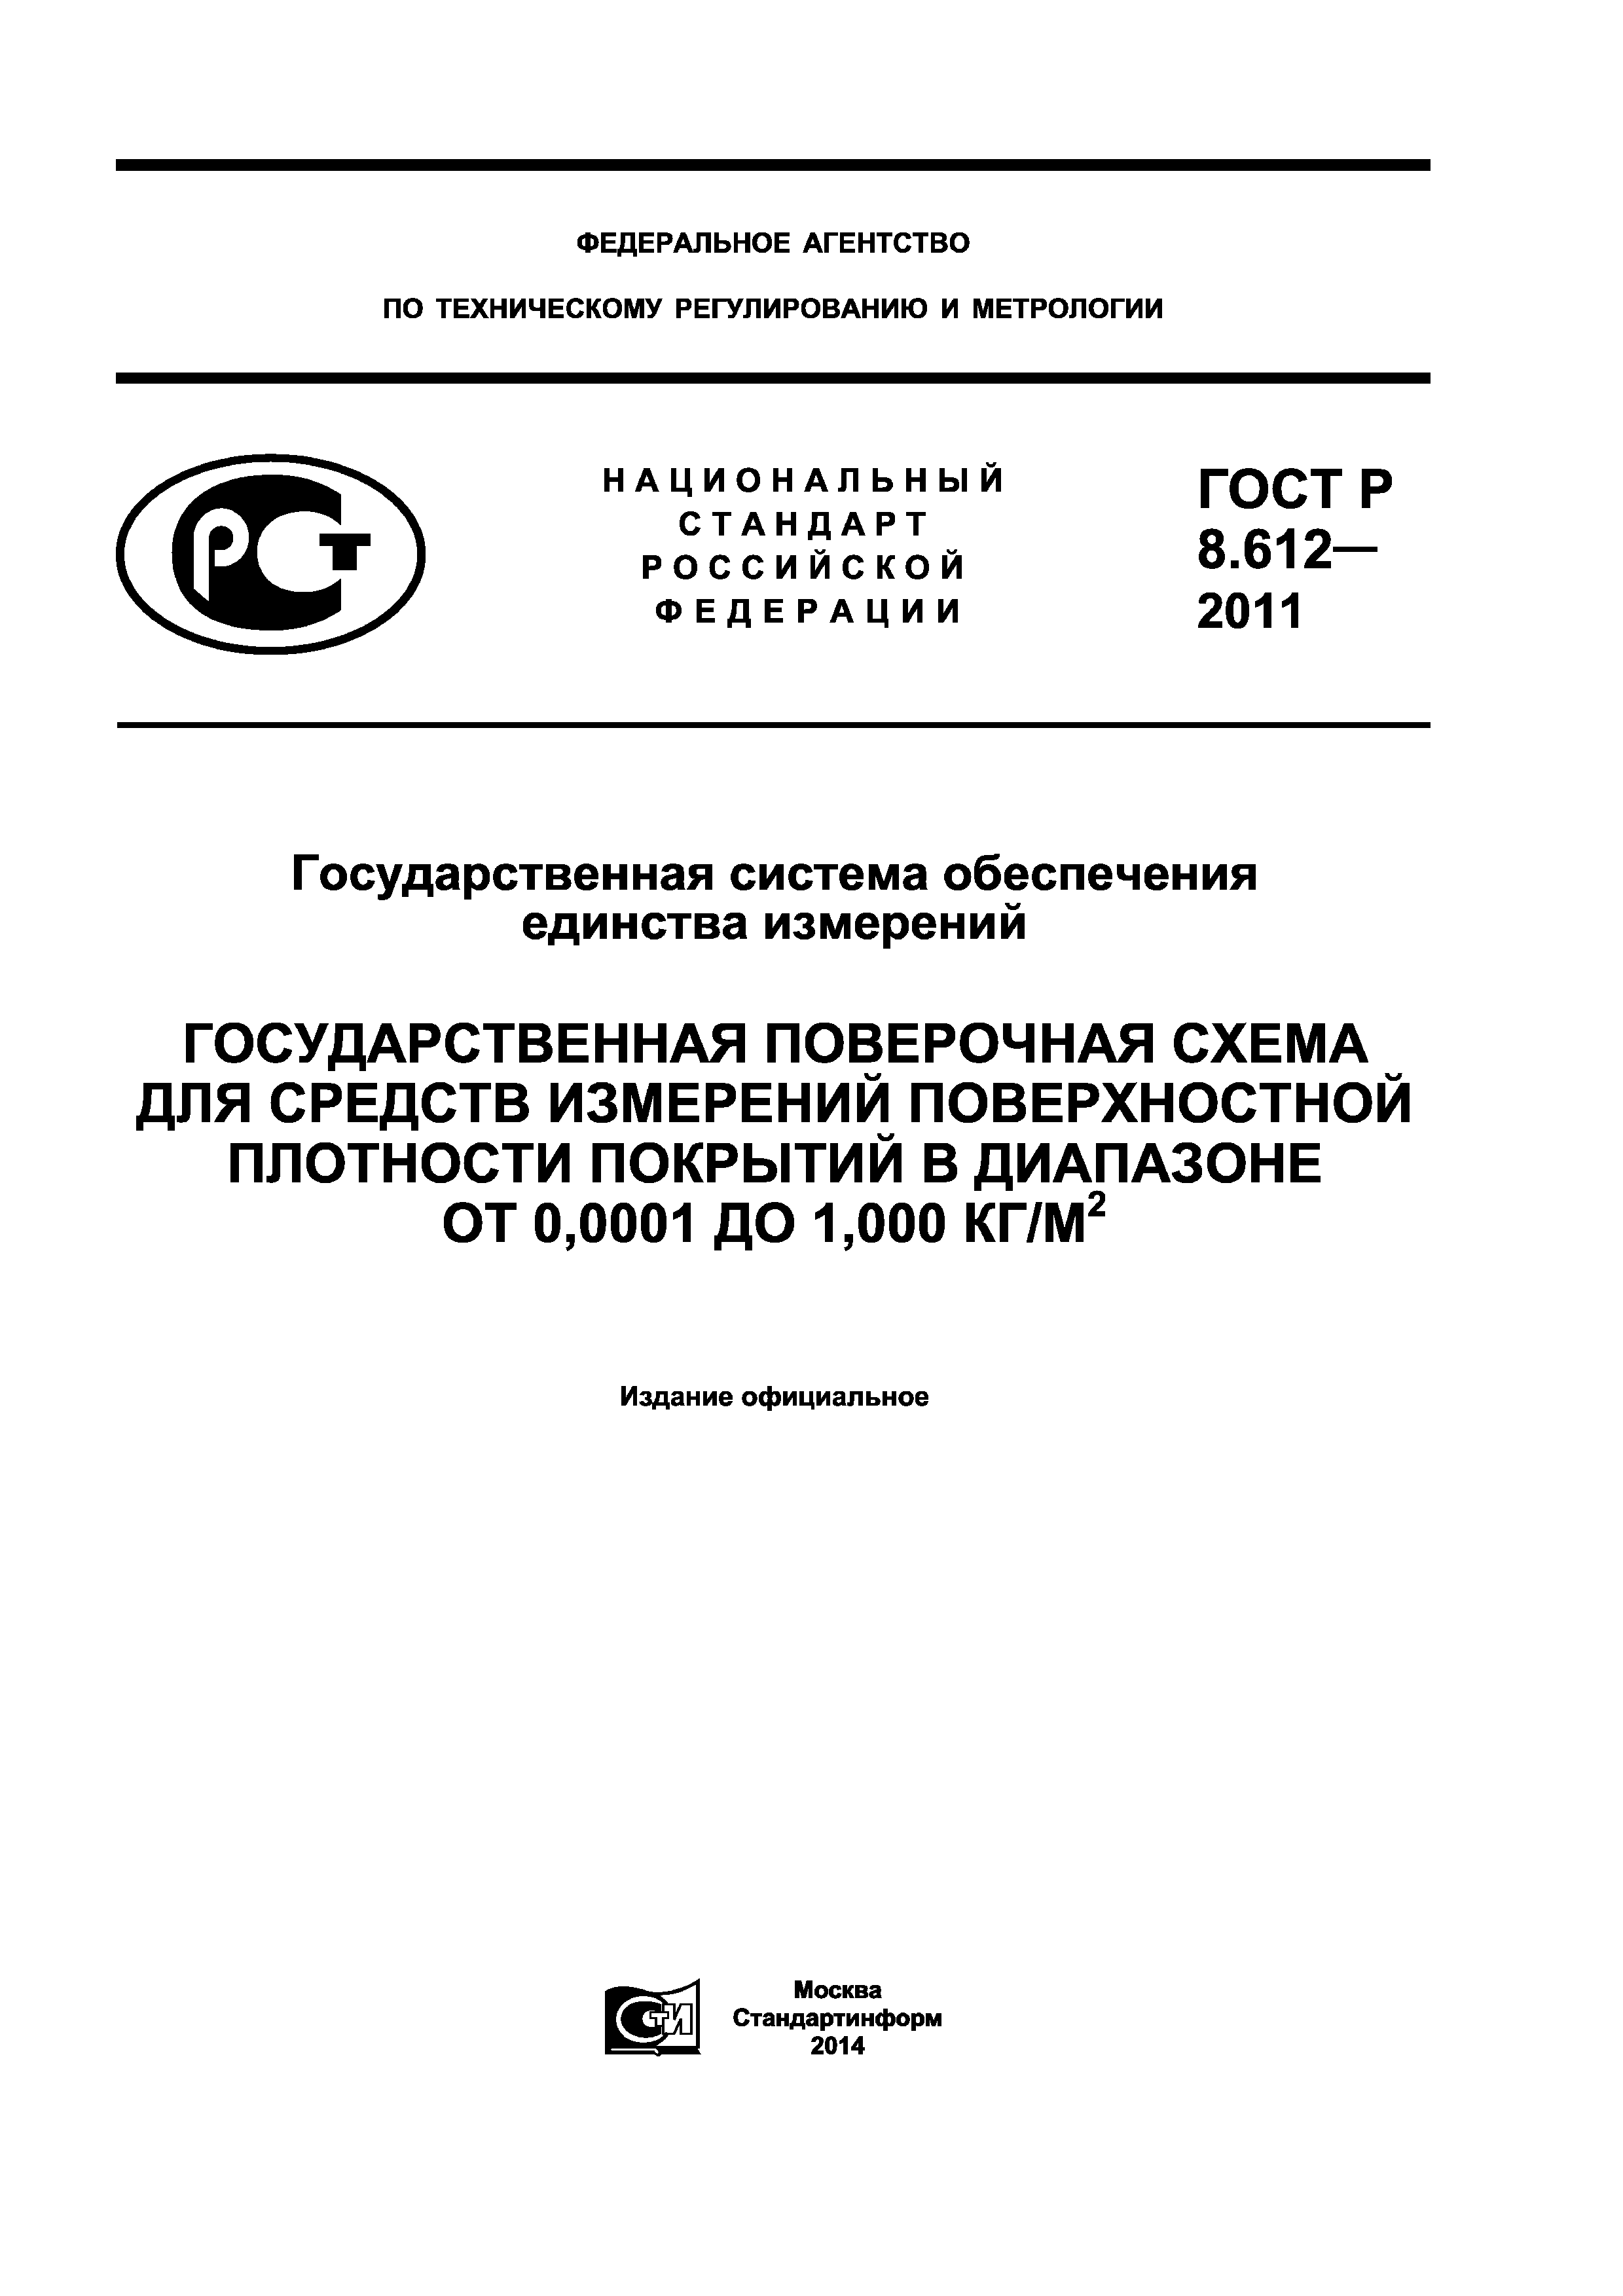 ГОСТ Р 8.612-2011